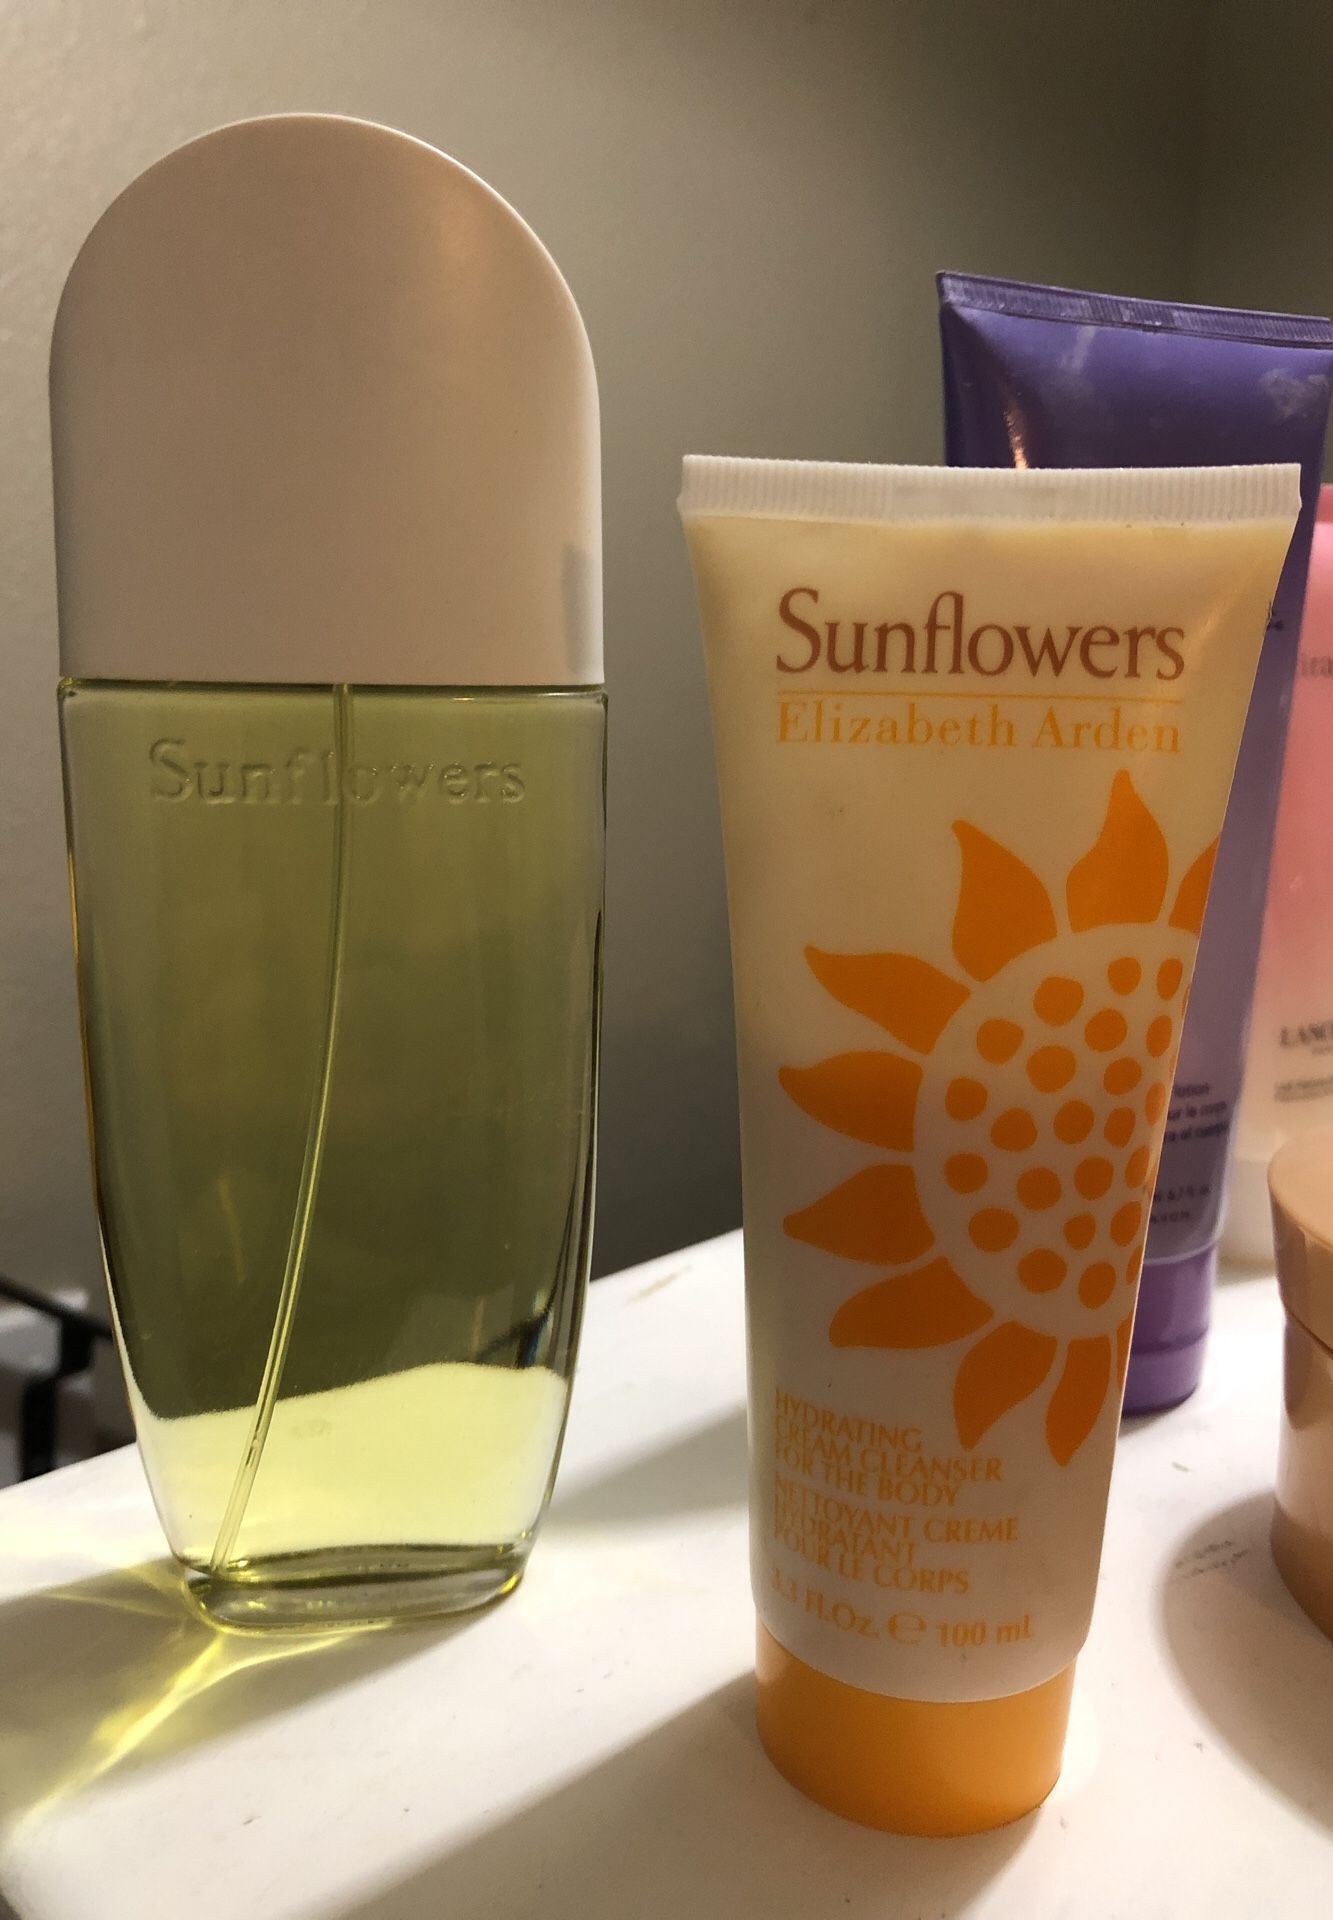 Elizabeth Arden Sunflower lotion and perfume